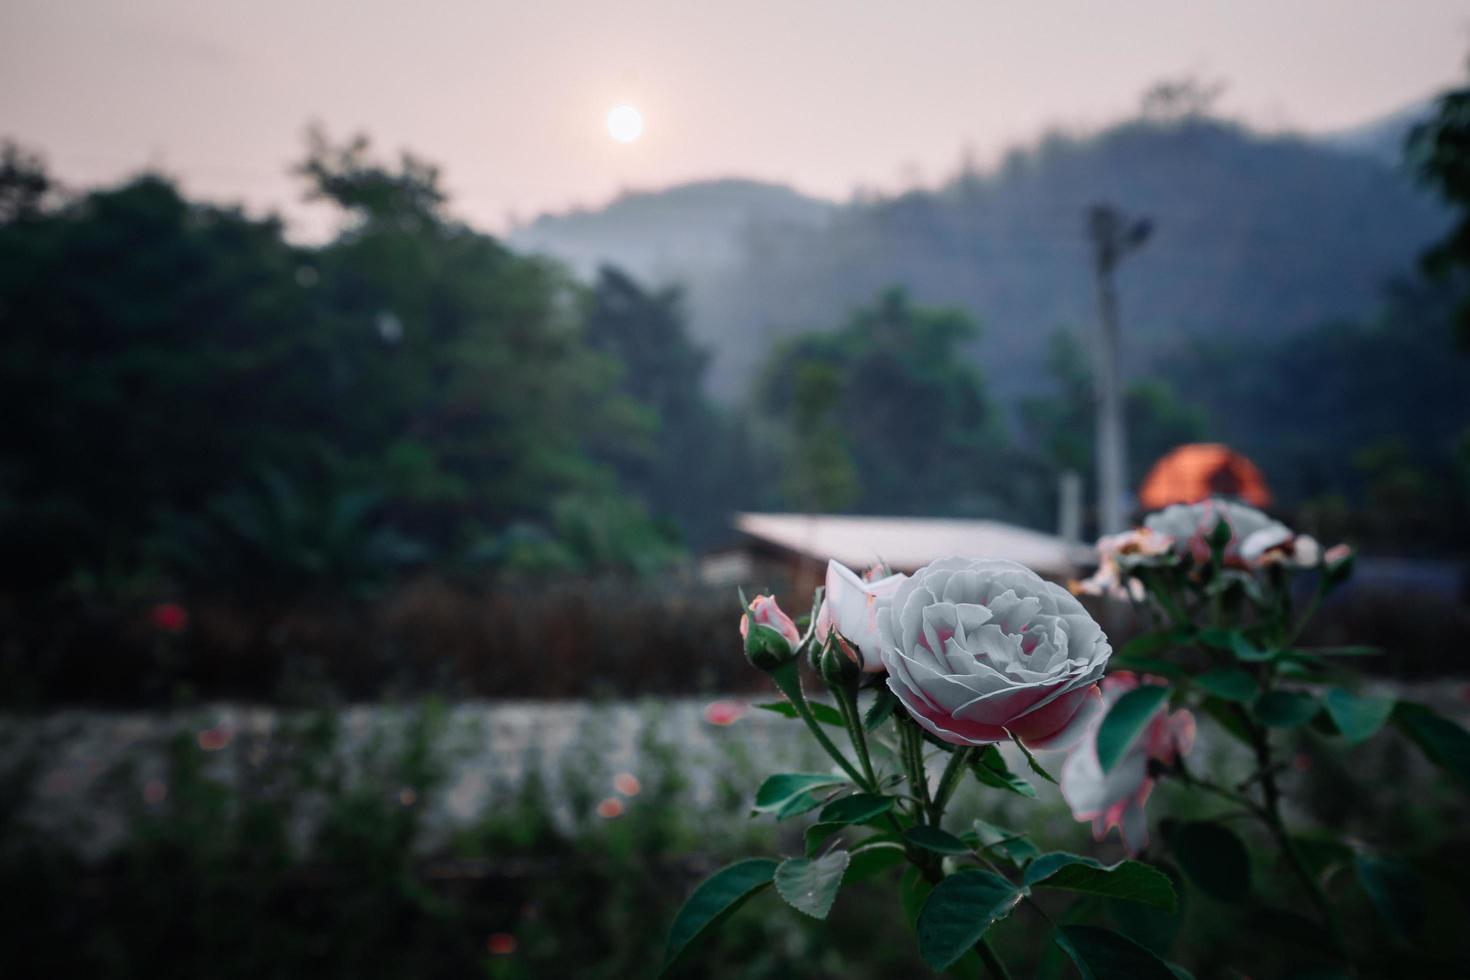 linda rosa em um jardim foto